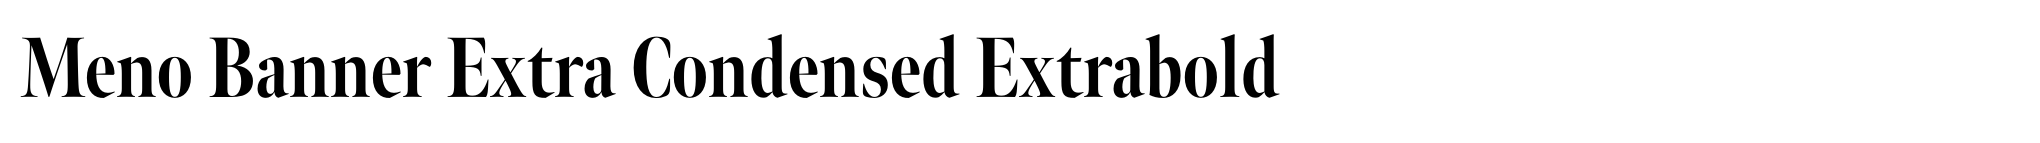 Meno Banner Extra Condensed Extrabold image